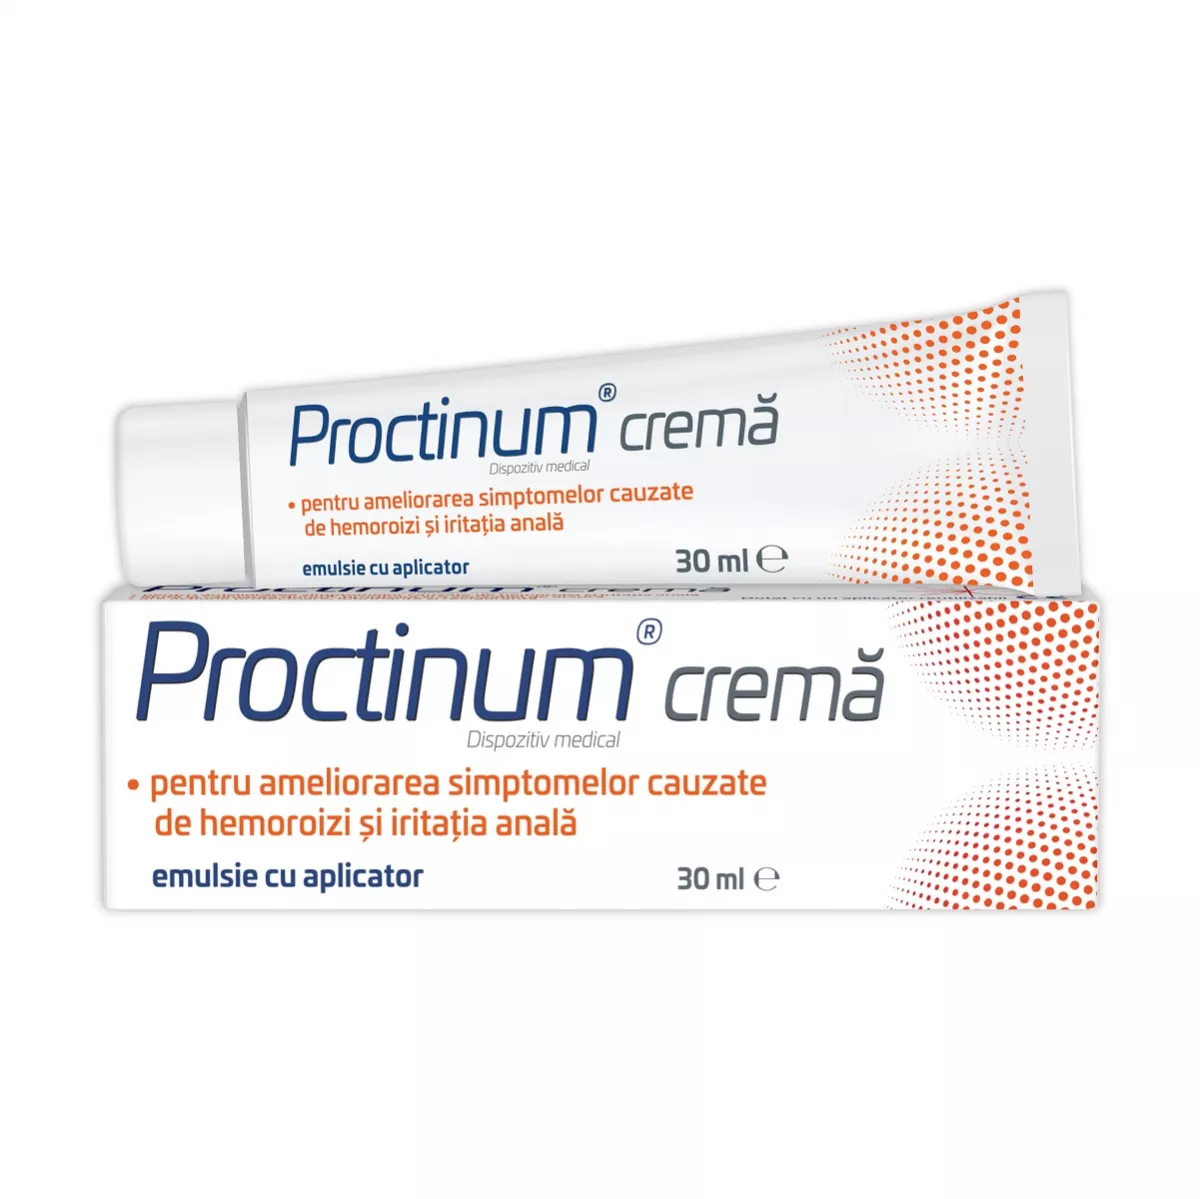 Proctinum crema x 30ml (Zdrovit), [],epastila.ro